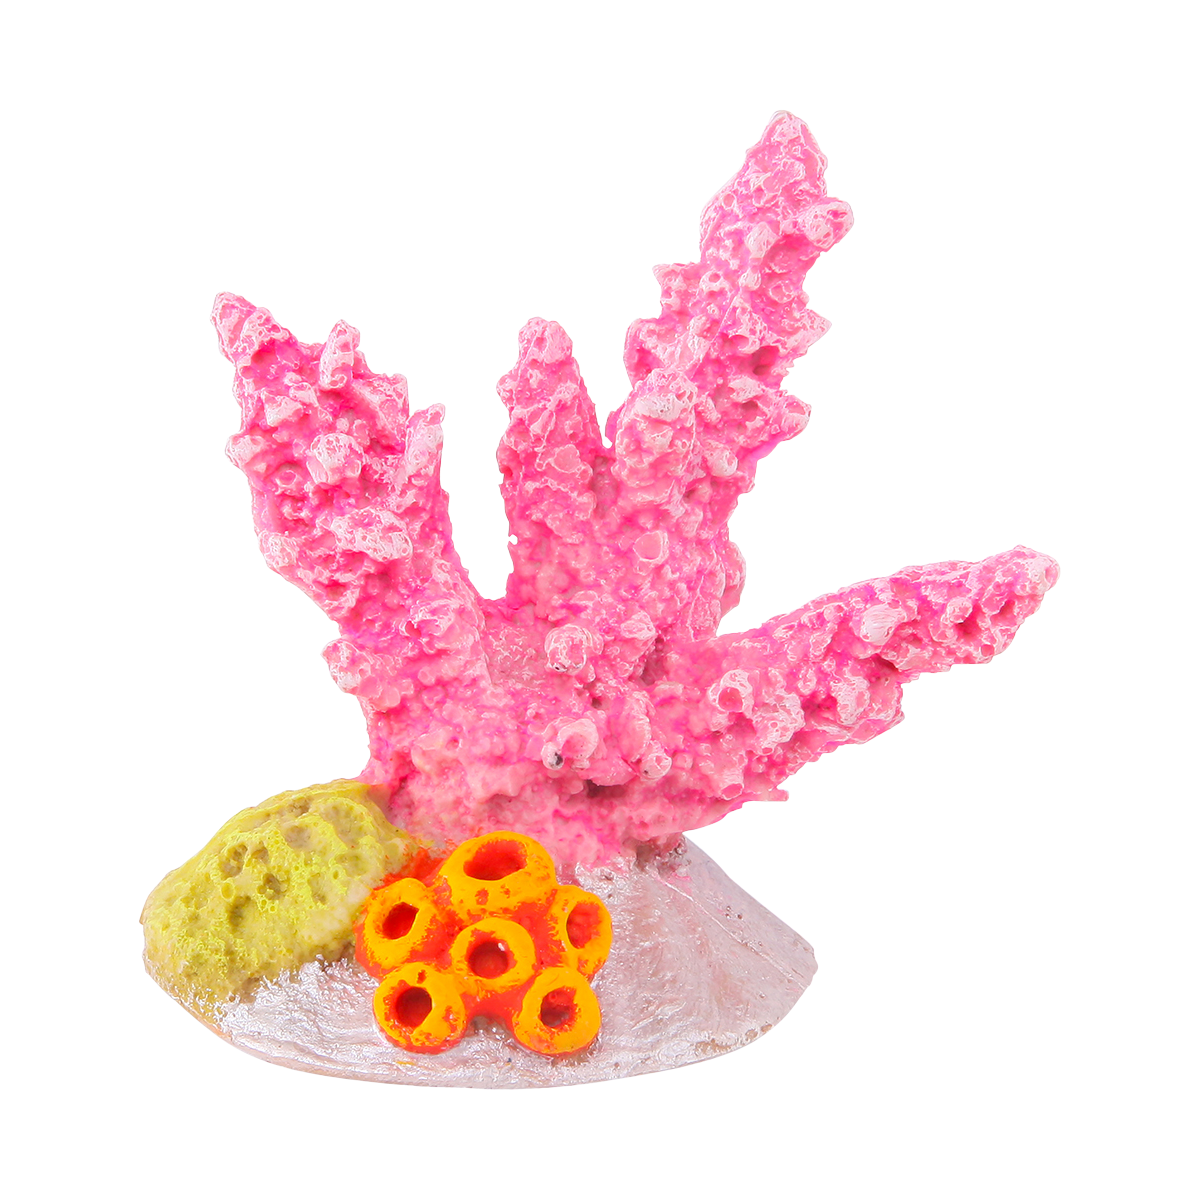 Kazoo Aquarium Ornament Coral with Shell Mini